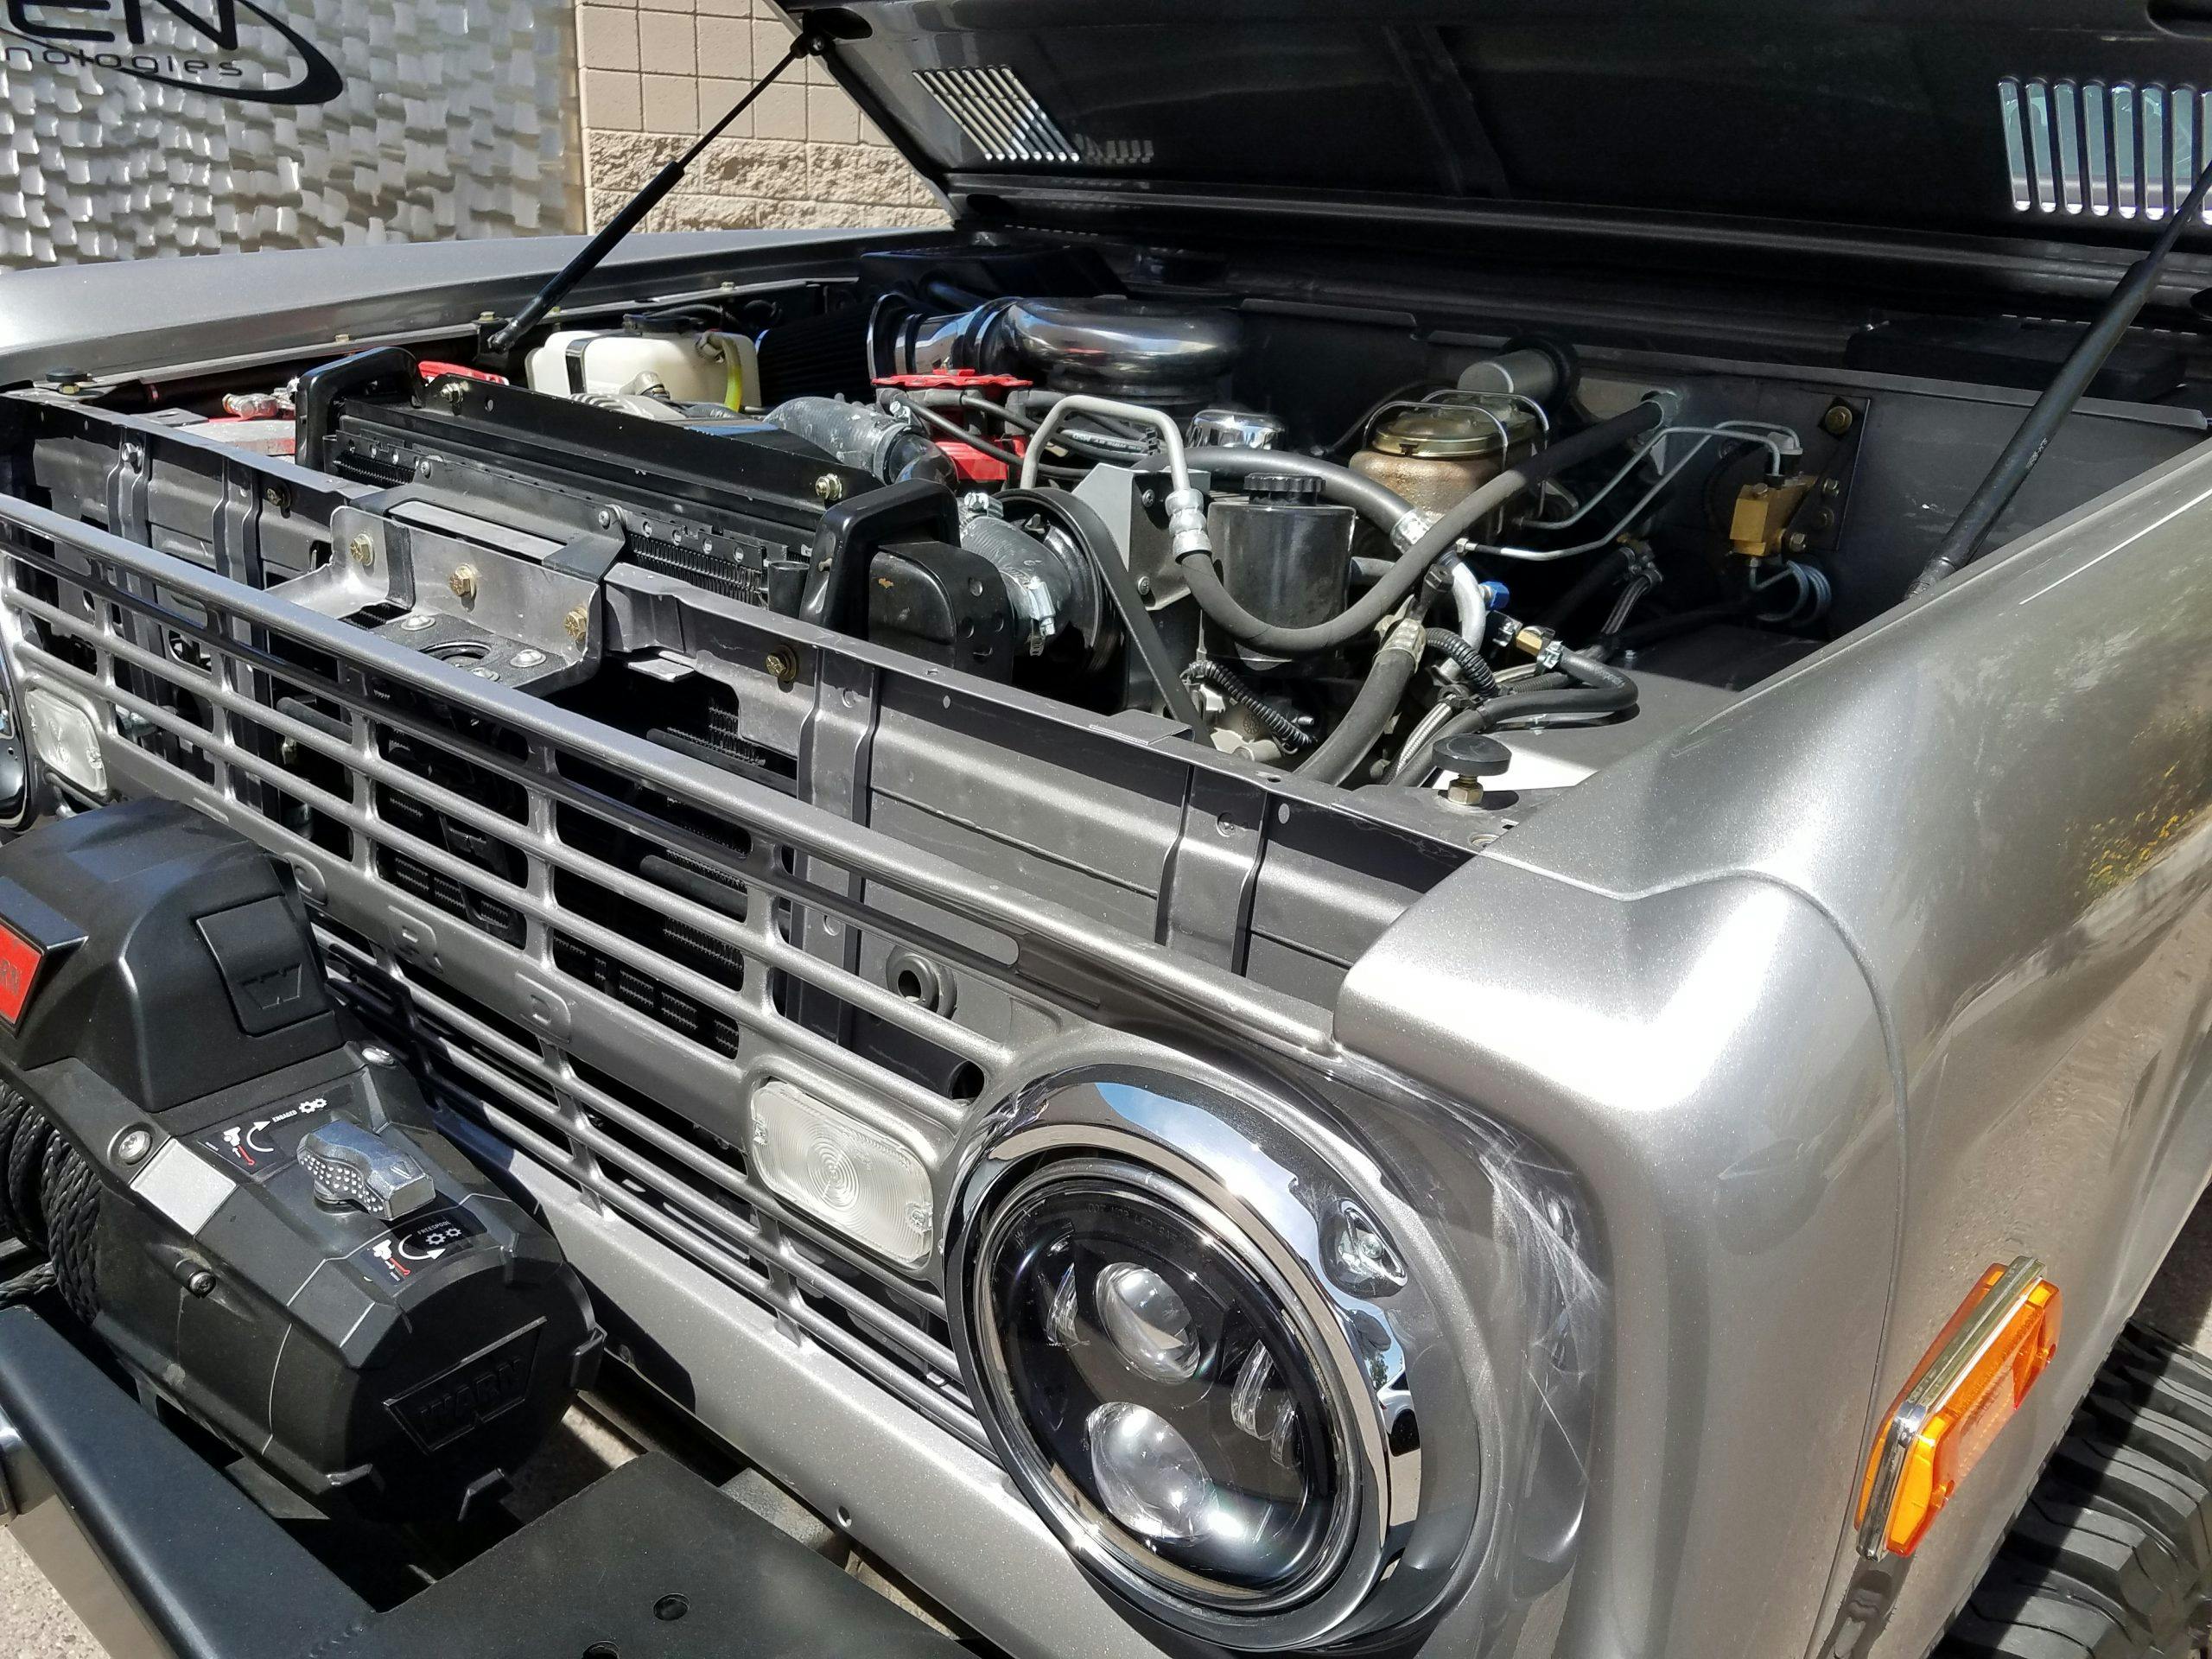 1968 Bronco restomod Ford crate motor 570 hp